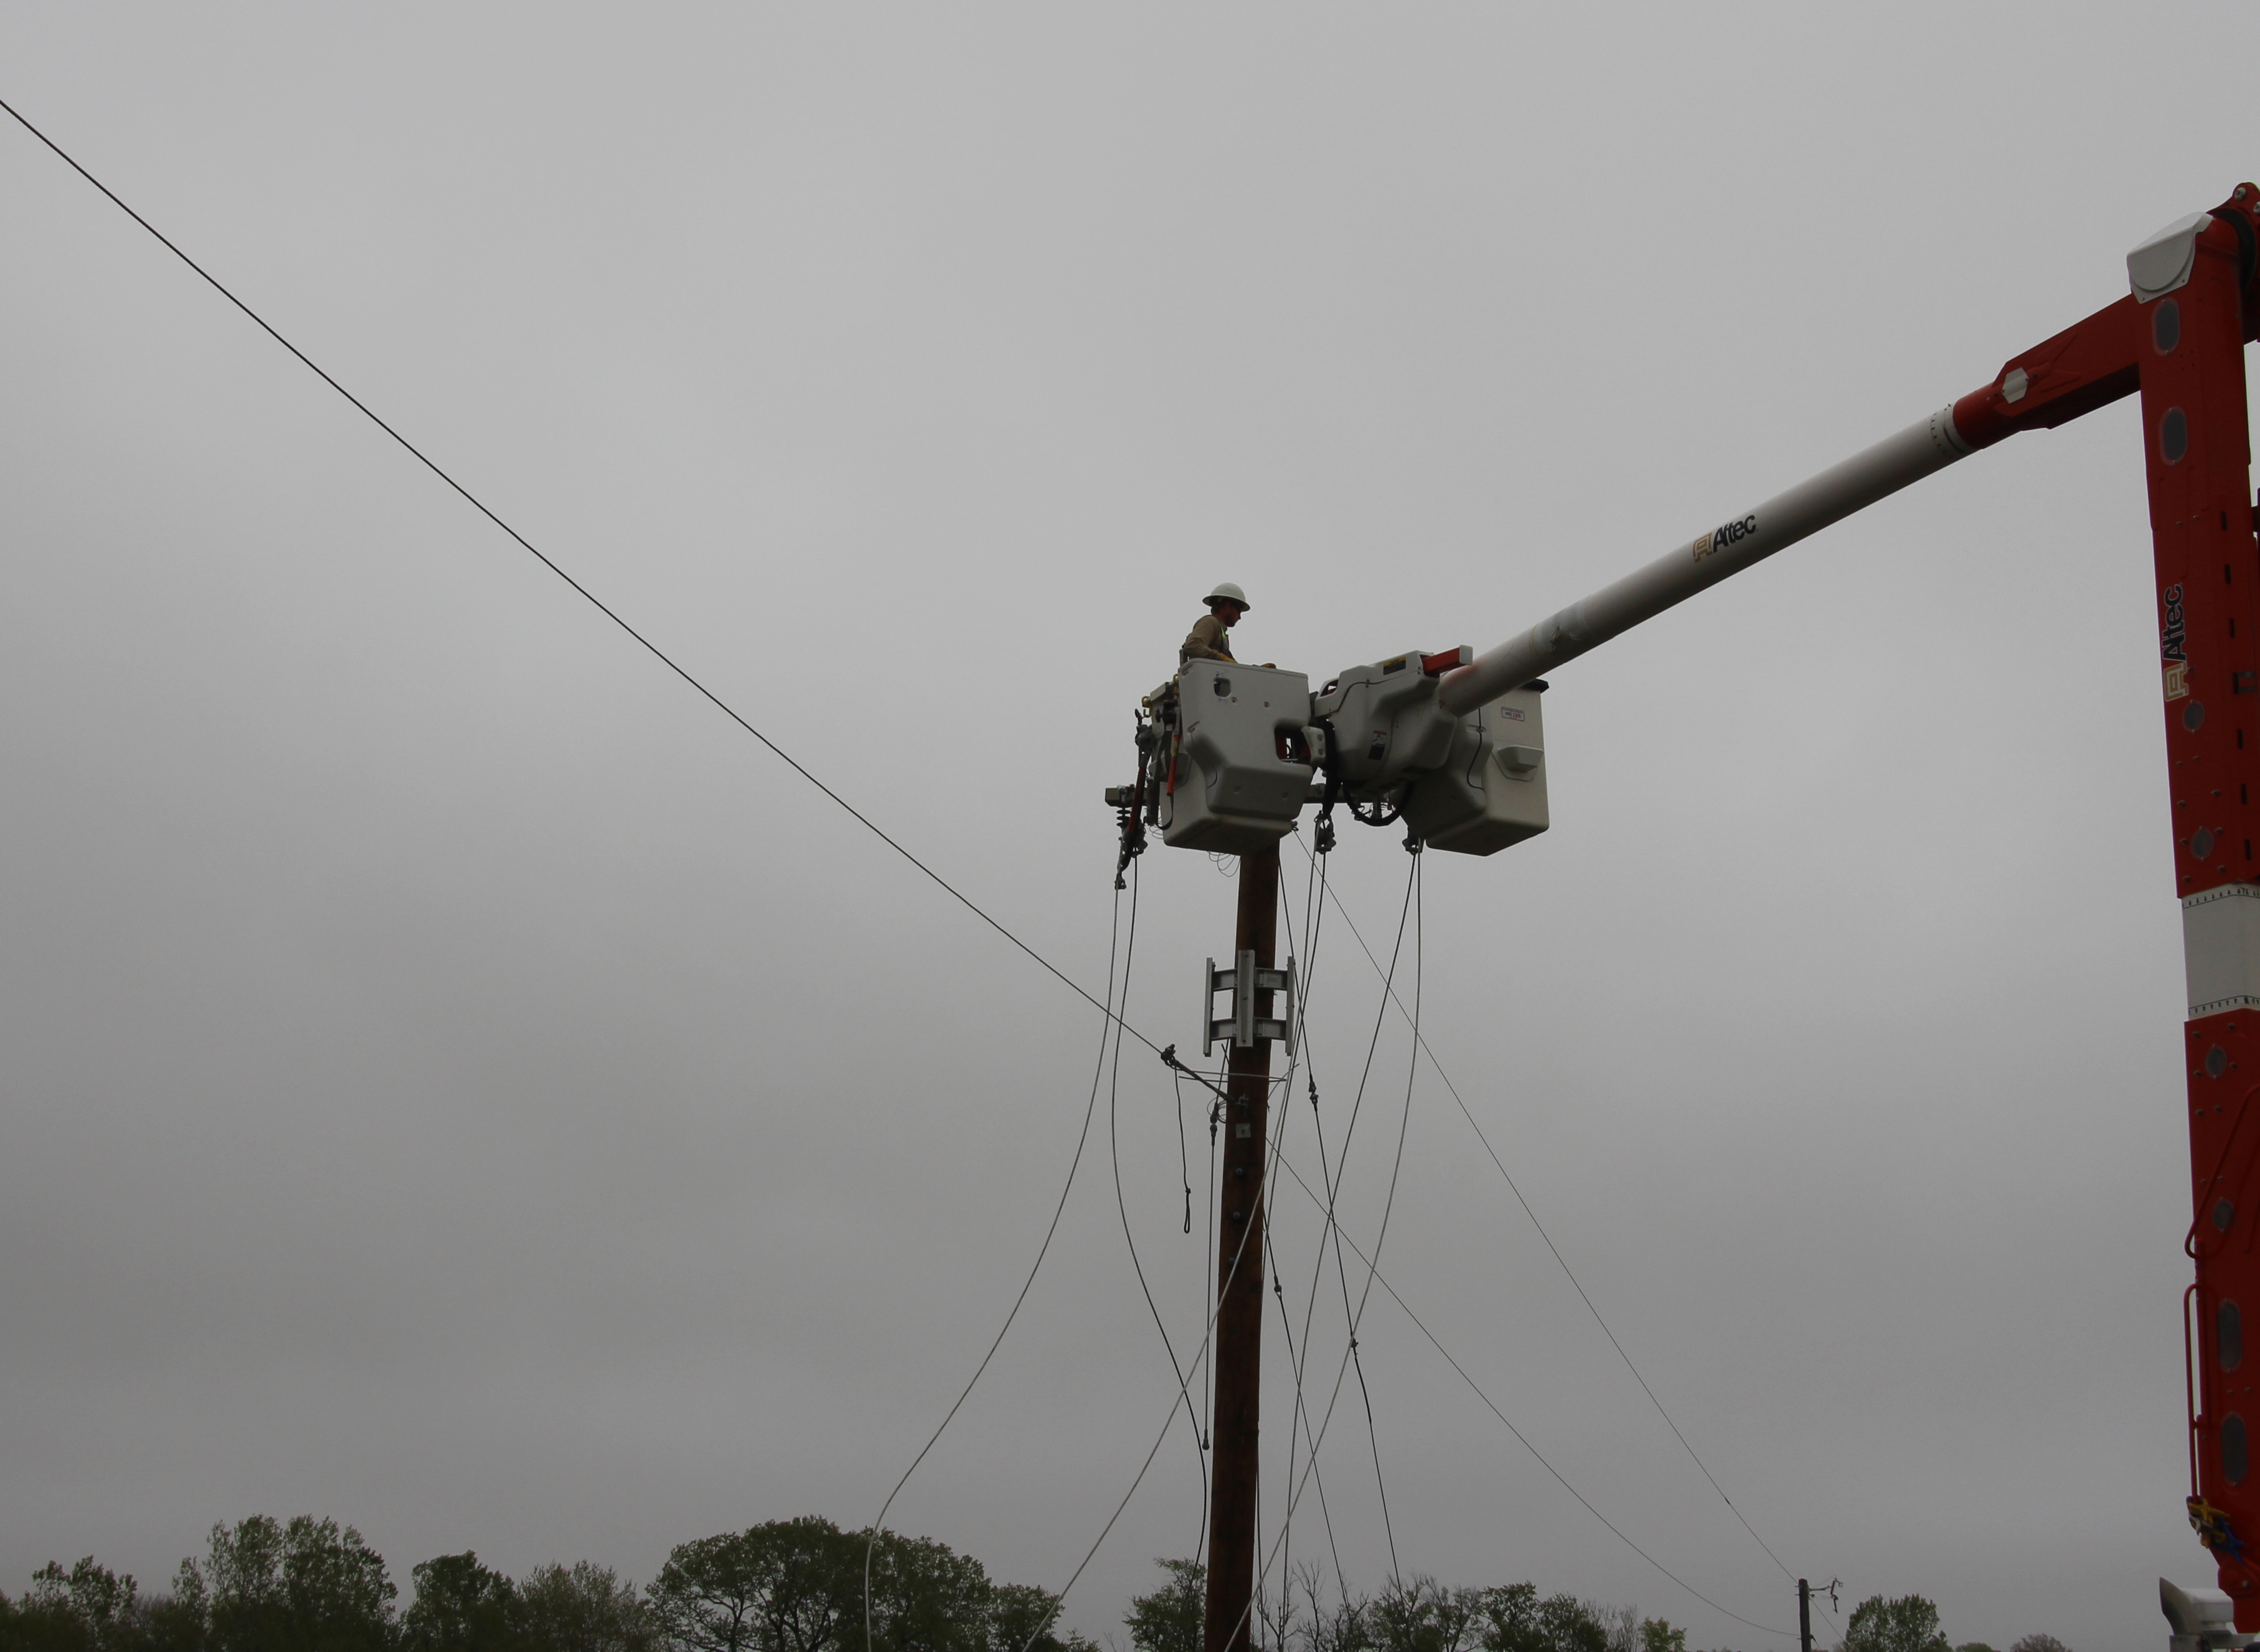 OPPD employee in bucket repairing lines on pole